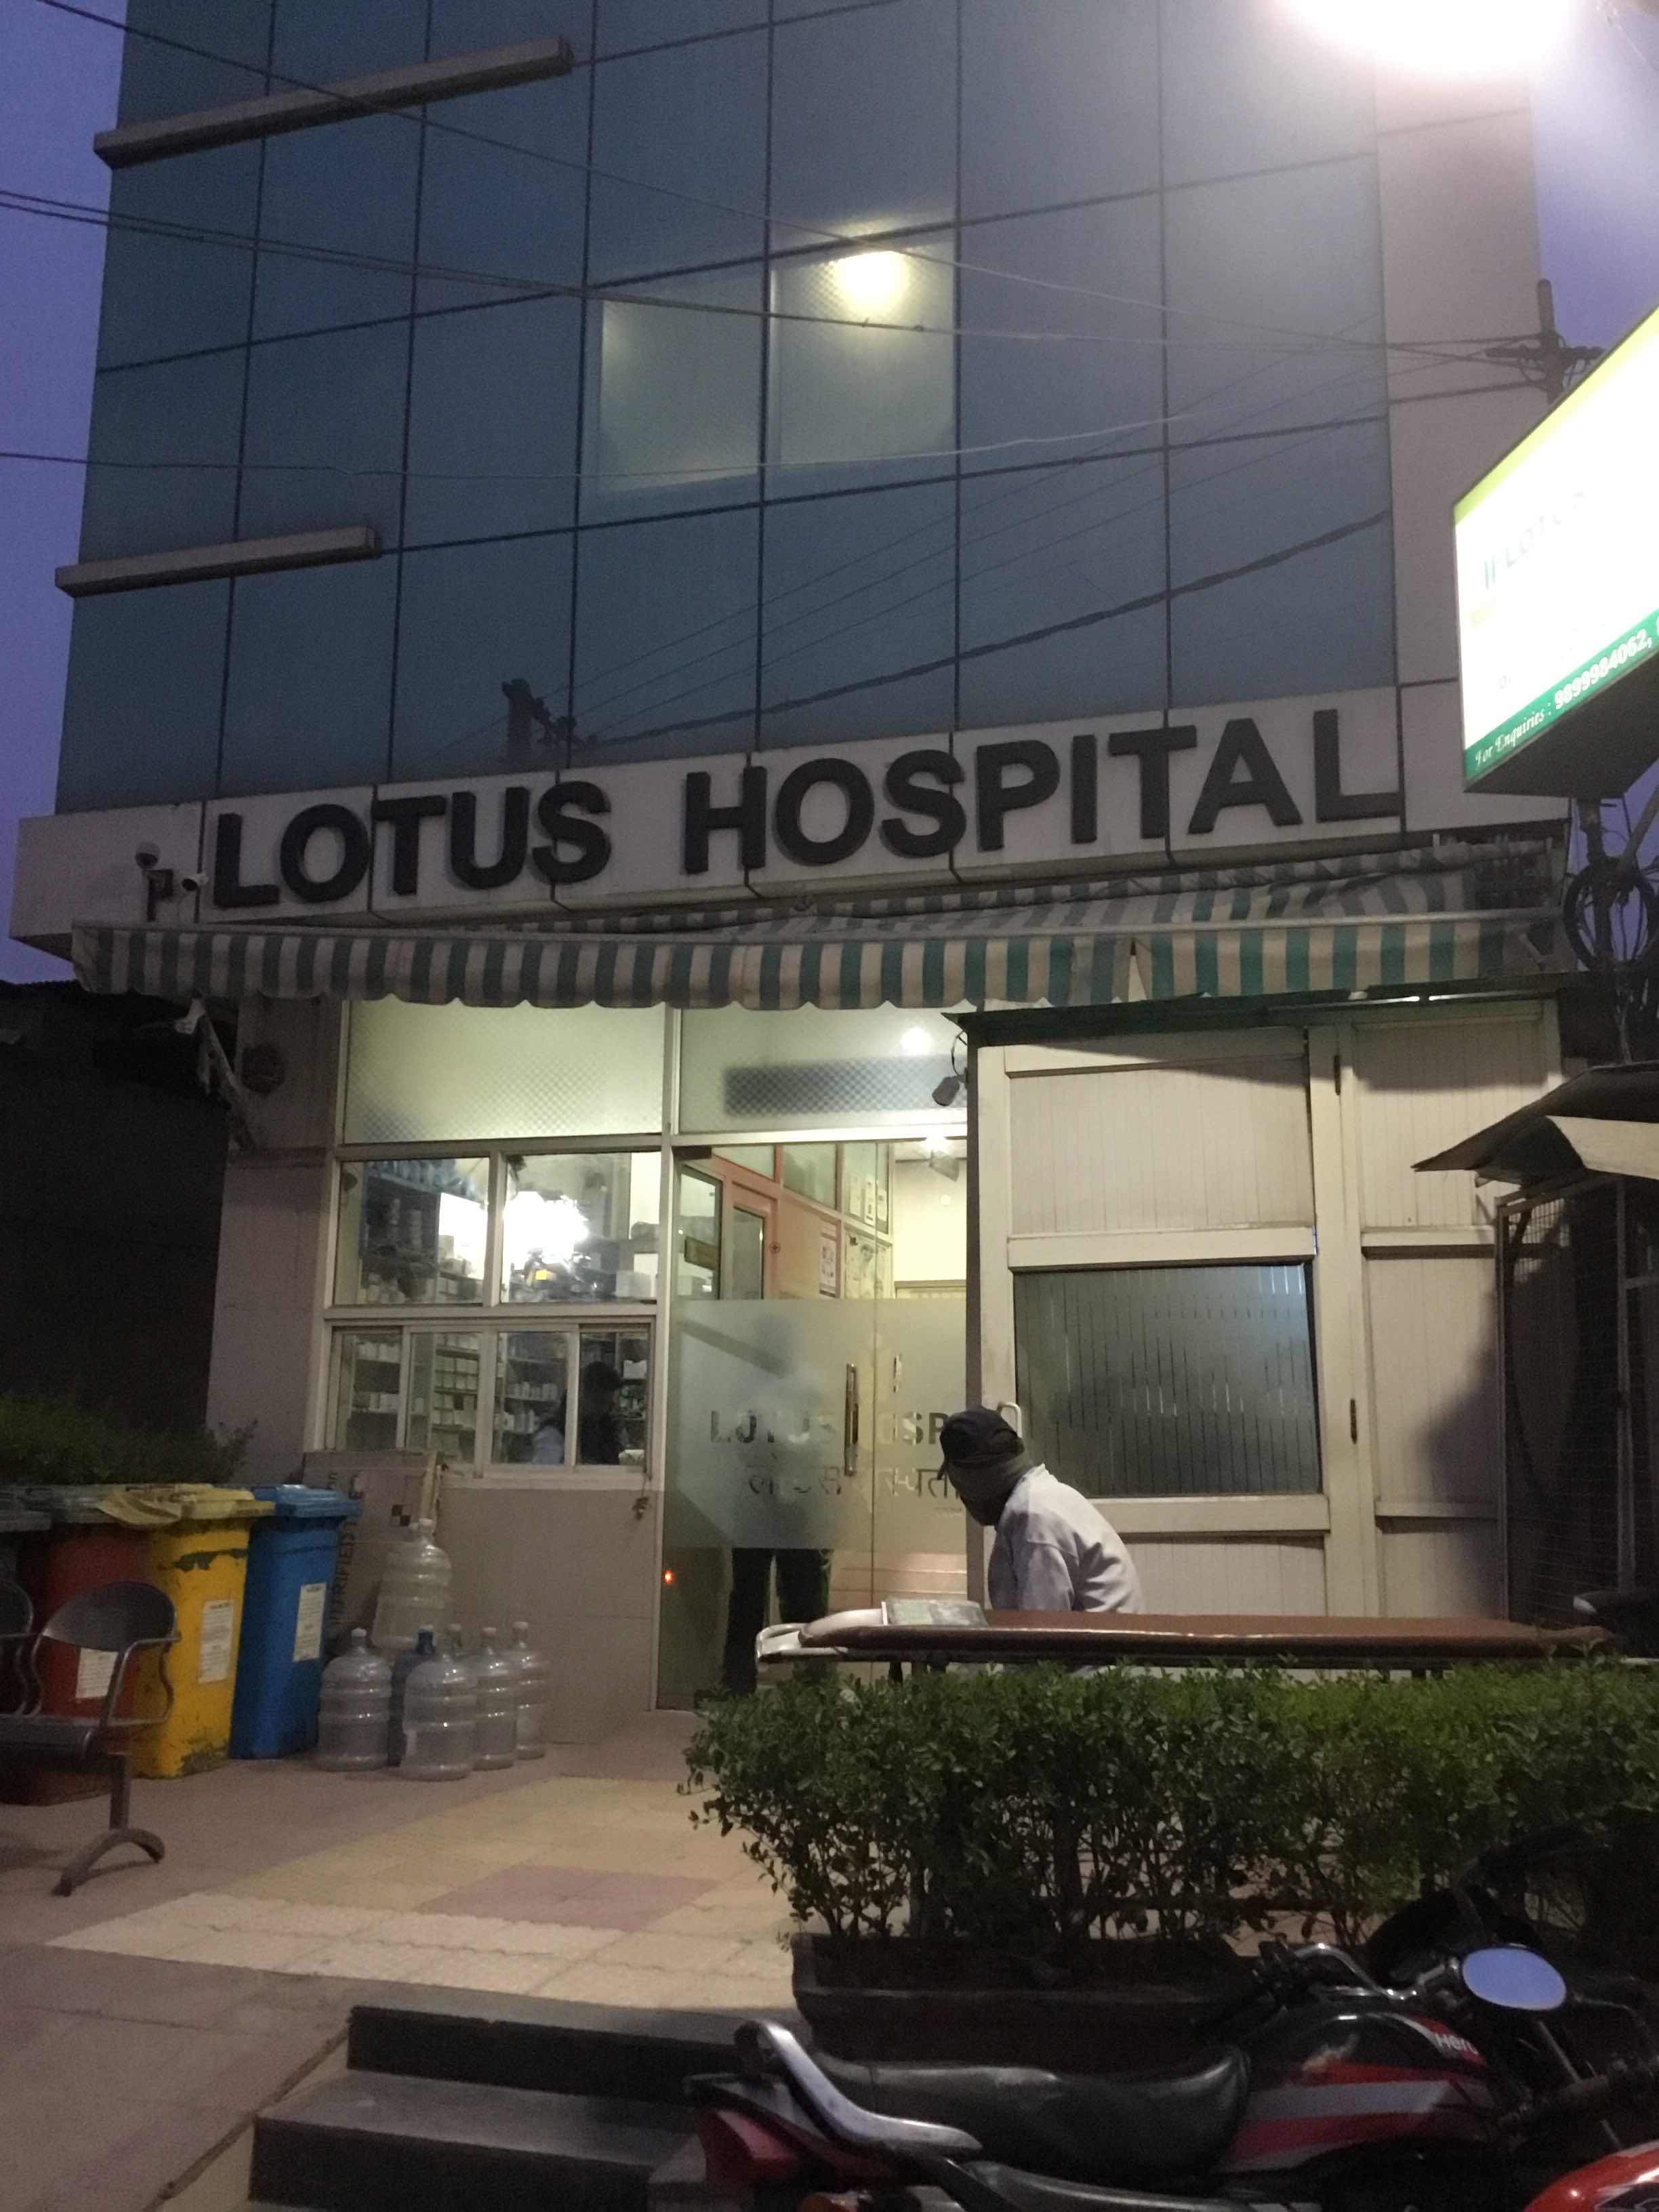 Lotus Hospital Logo